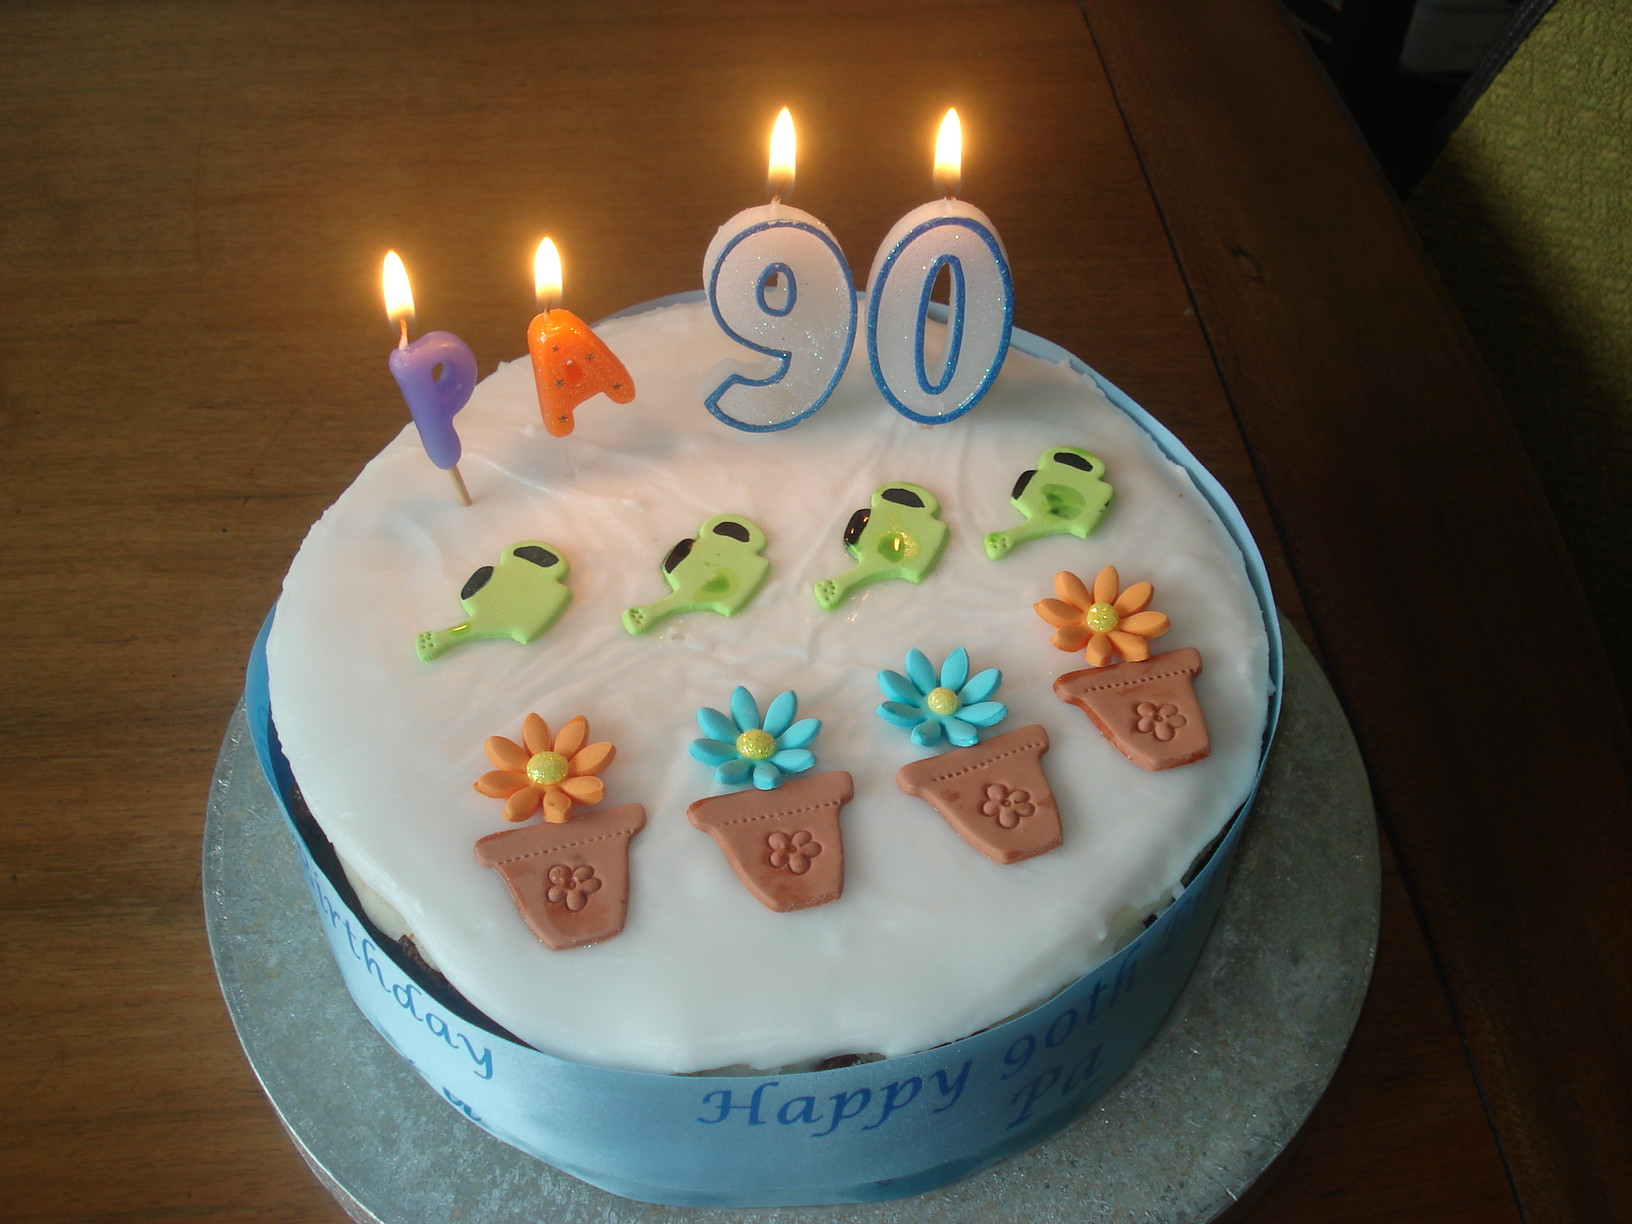 90th Birthday Cake
 My Dad’s 90th birthday cake